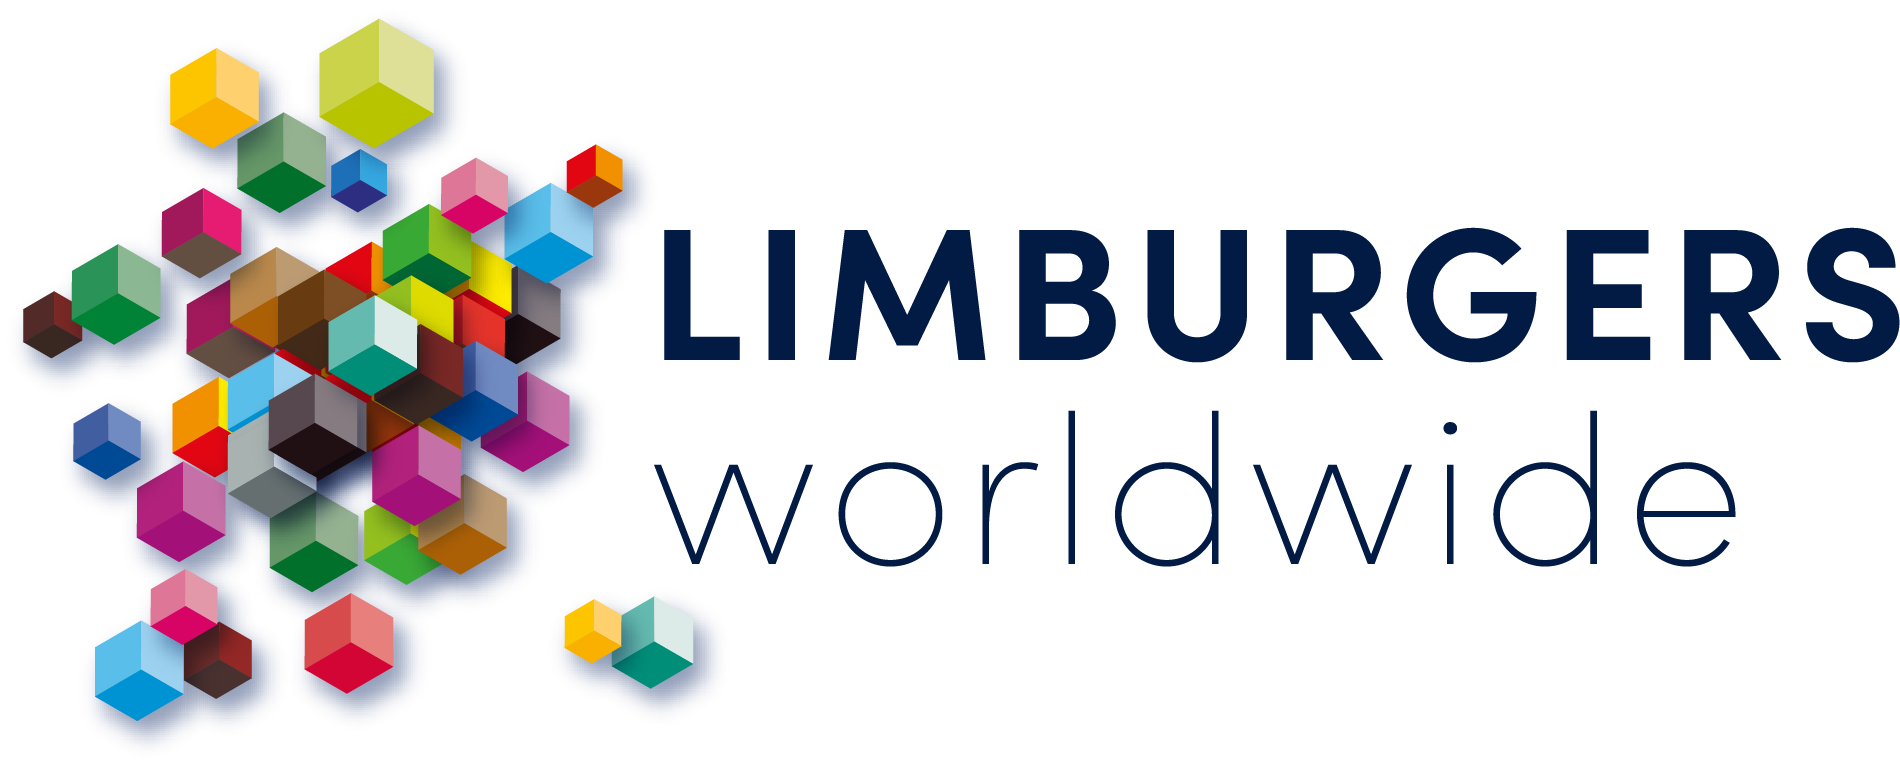 Limburgers Worldwide